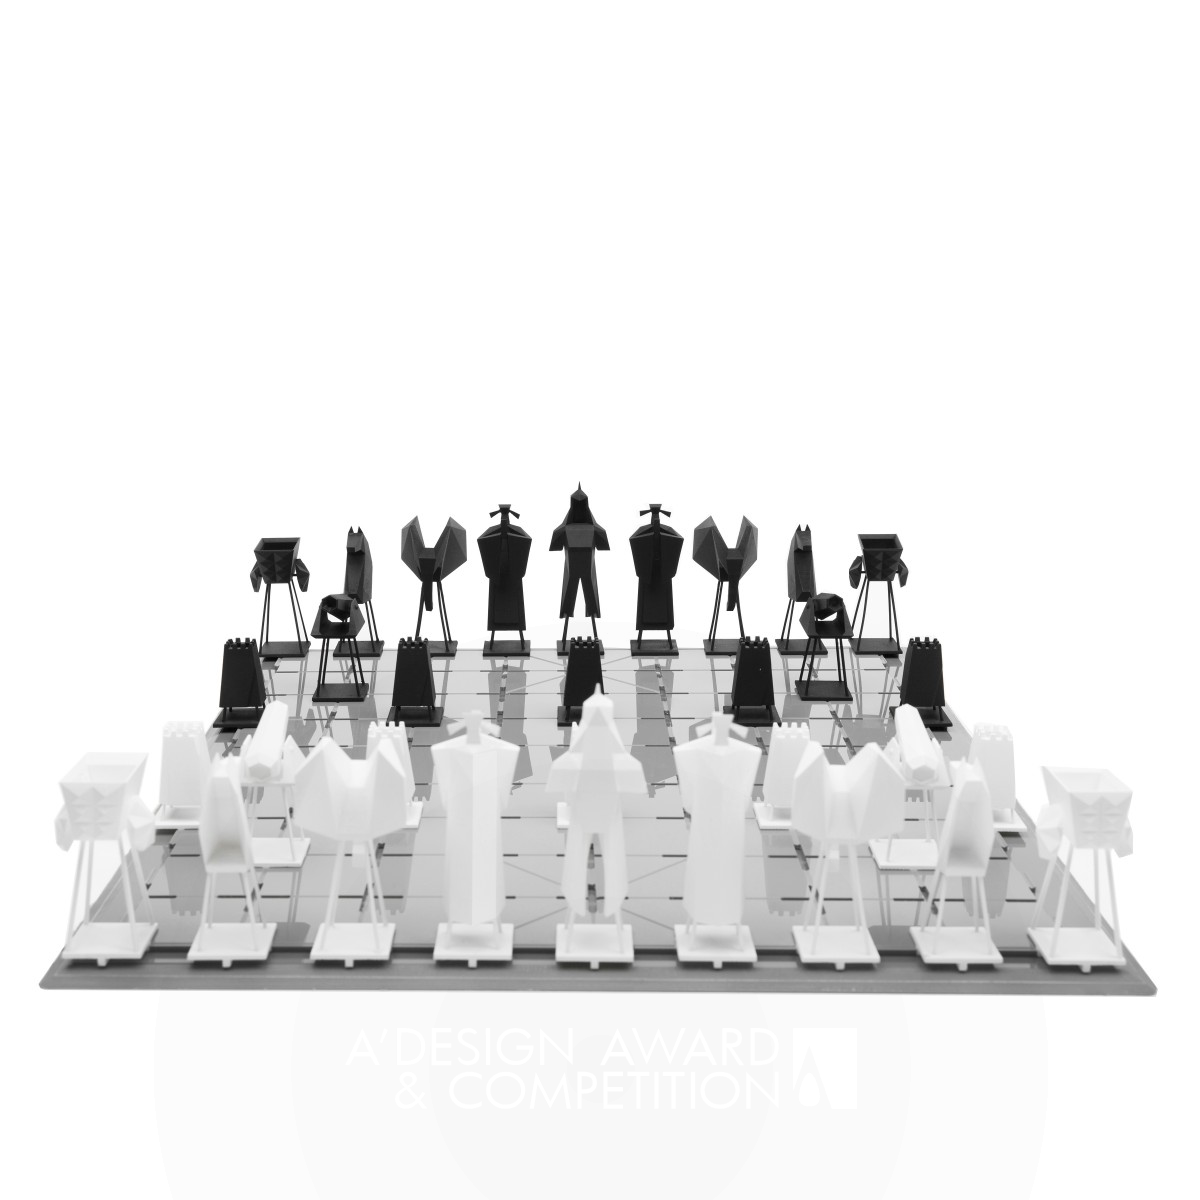 CHESS DRAMA Three-dimensional Chinese chess  by Lingfang Shen